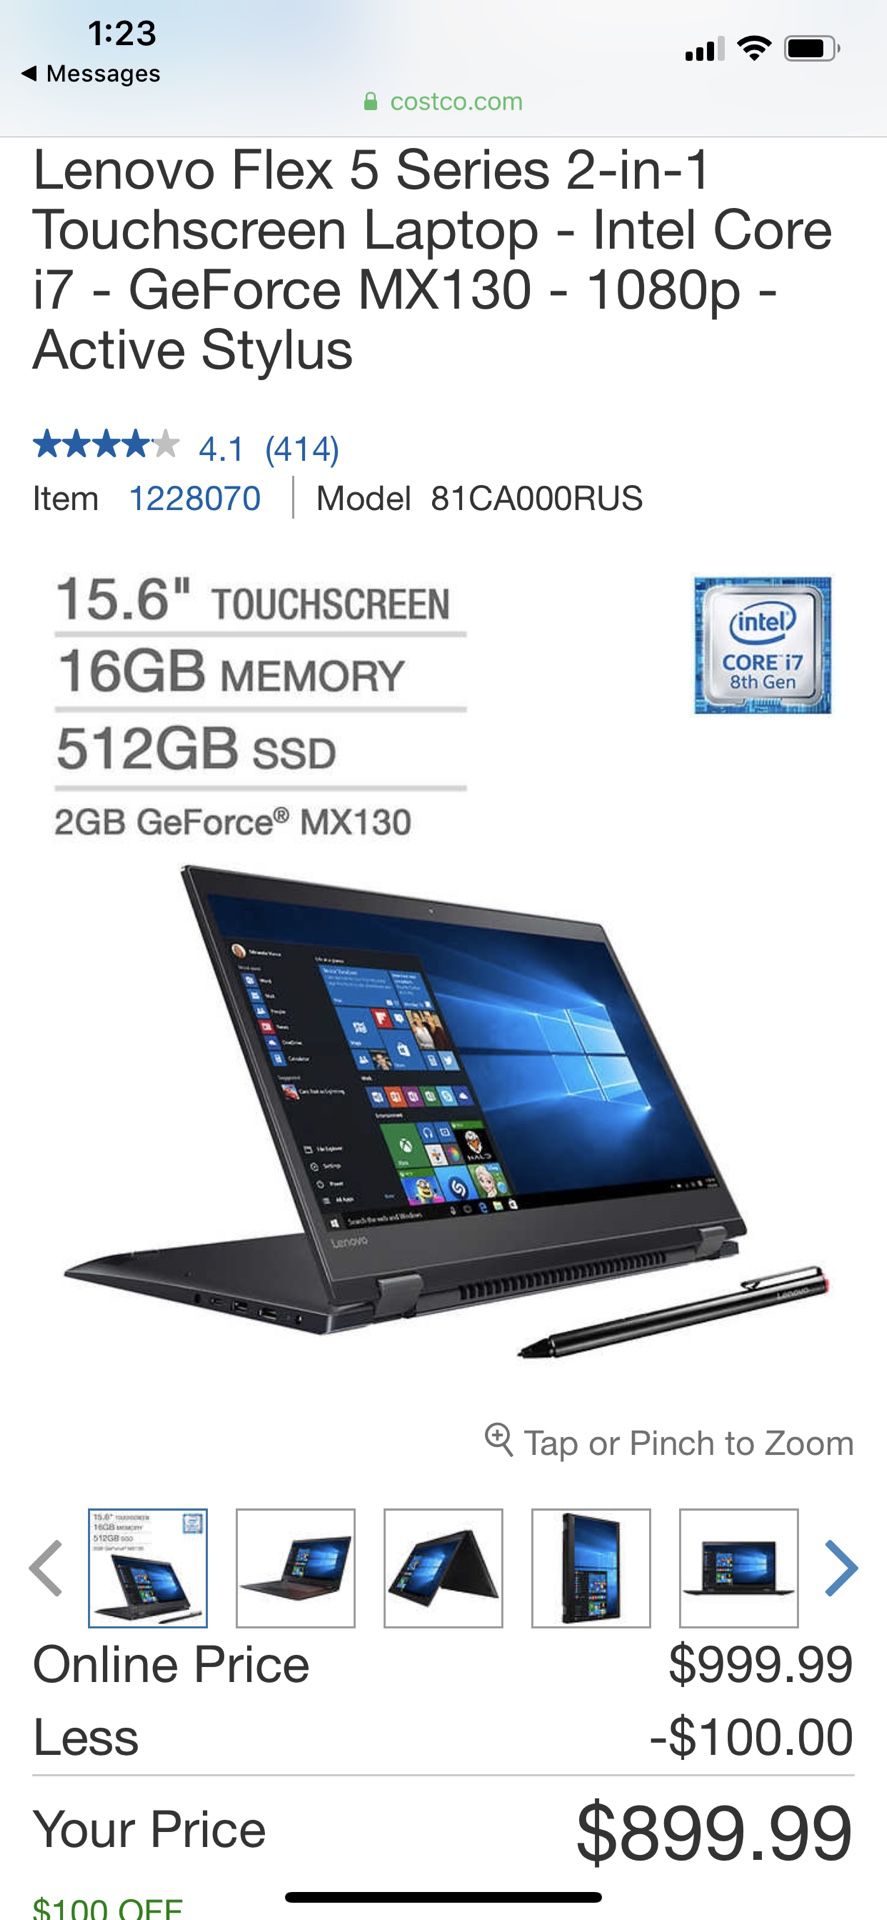 2 in 1 touchscreen laptop (LENOVO FLEX 5 Series)